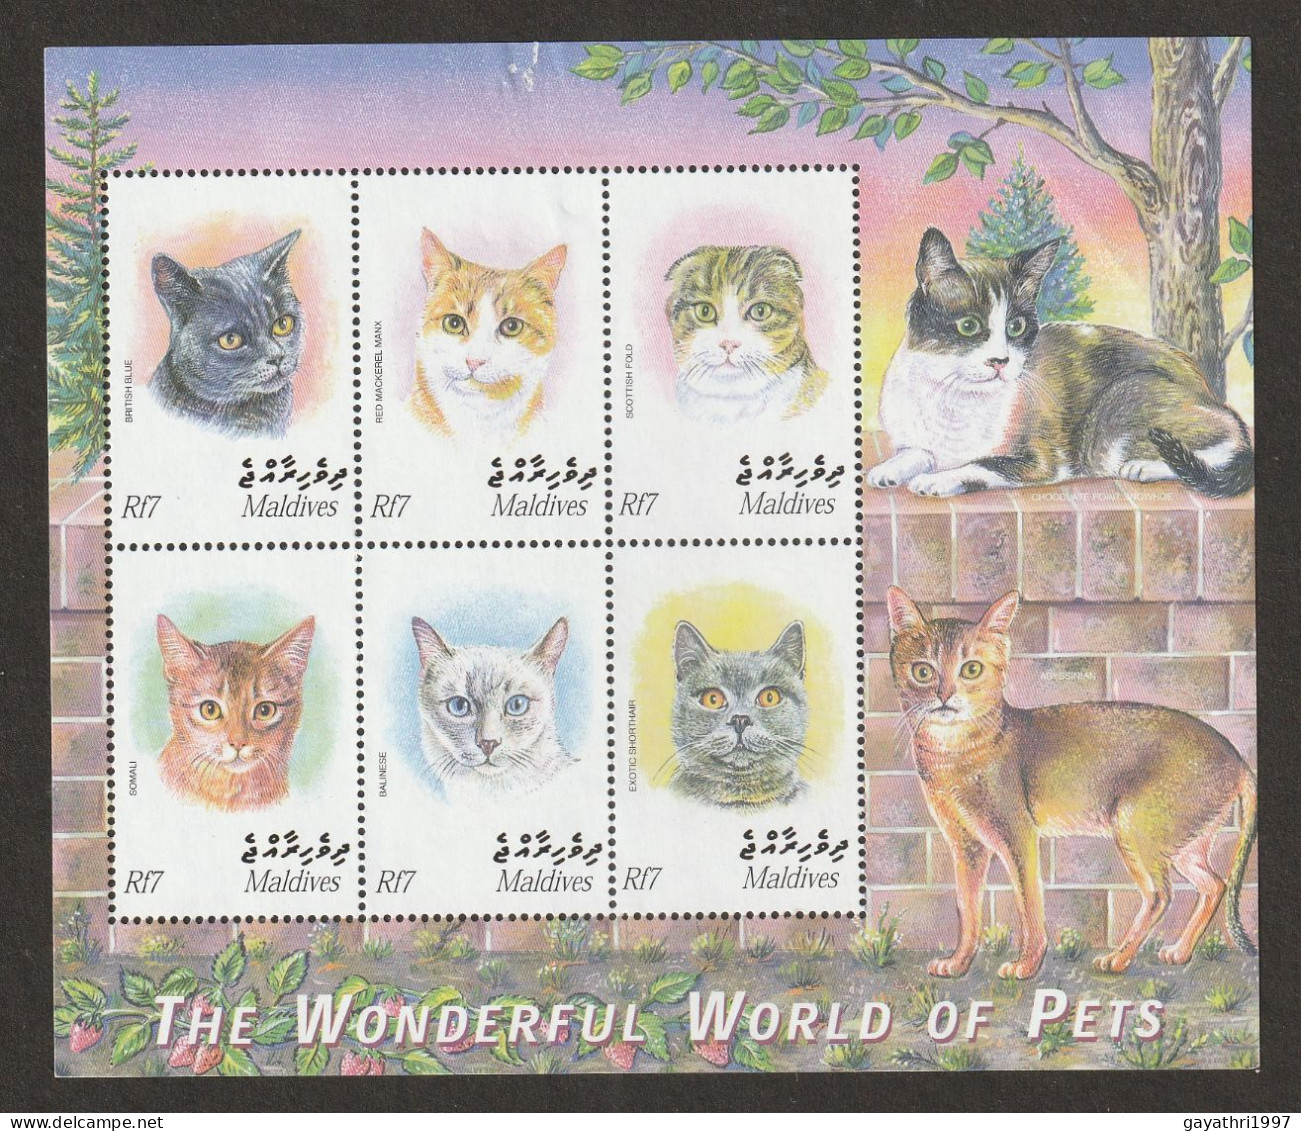 Maldives The Wonderful World Of Pets Cats Miniature Sheet Mint Good Condition (S-50) - Marionetas